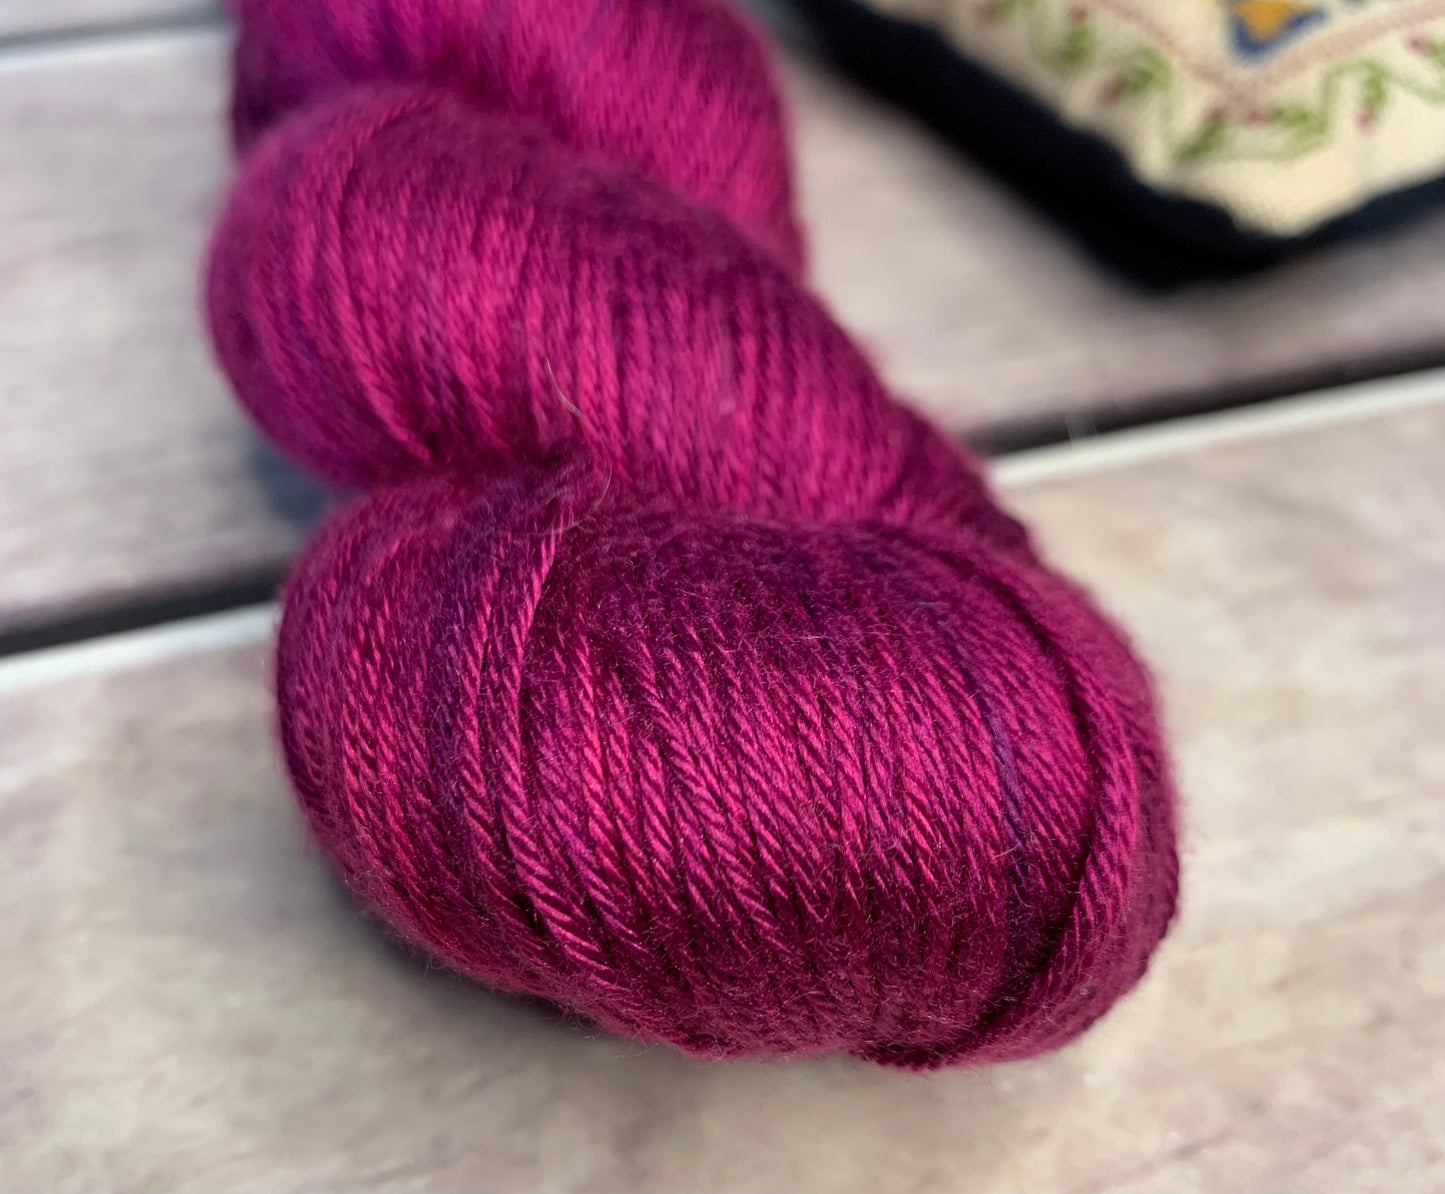 Wild Orchid - 4 ply in Mulberry silk yarn - Pekoe f